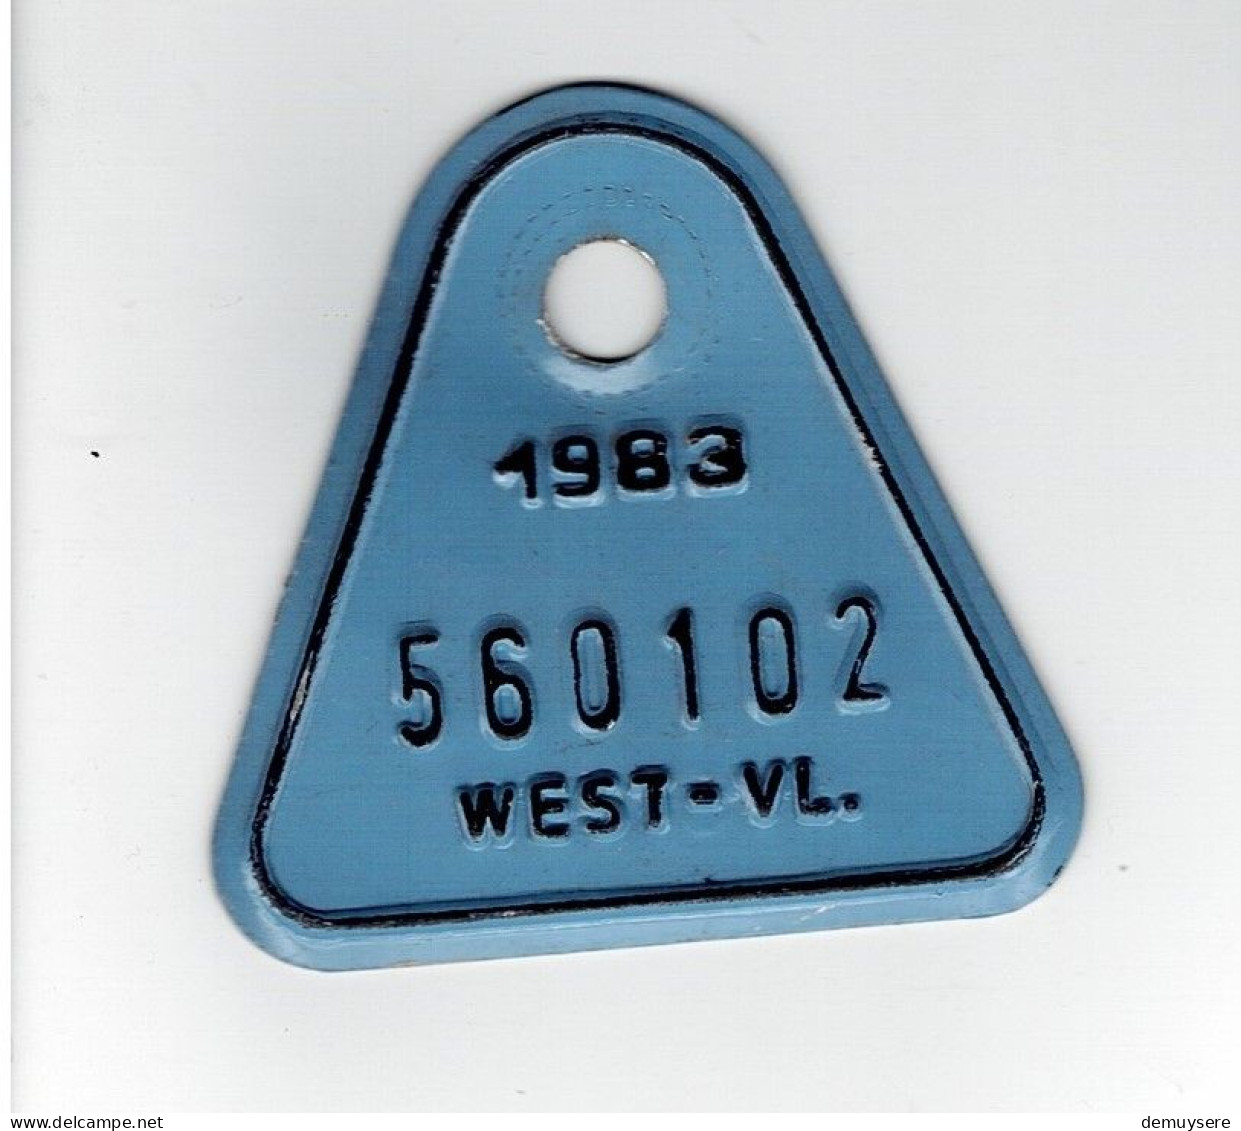 LADE D - FIETSPLAAT - 1983  -  WEST-VL - 560102 - Nummerplaten